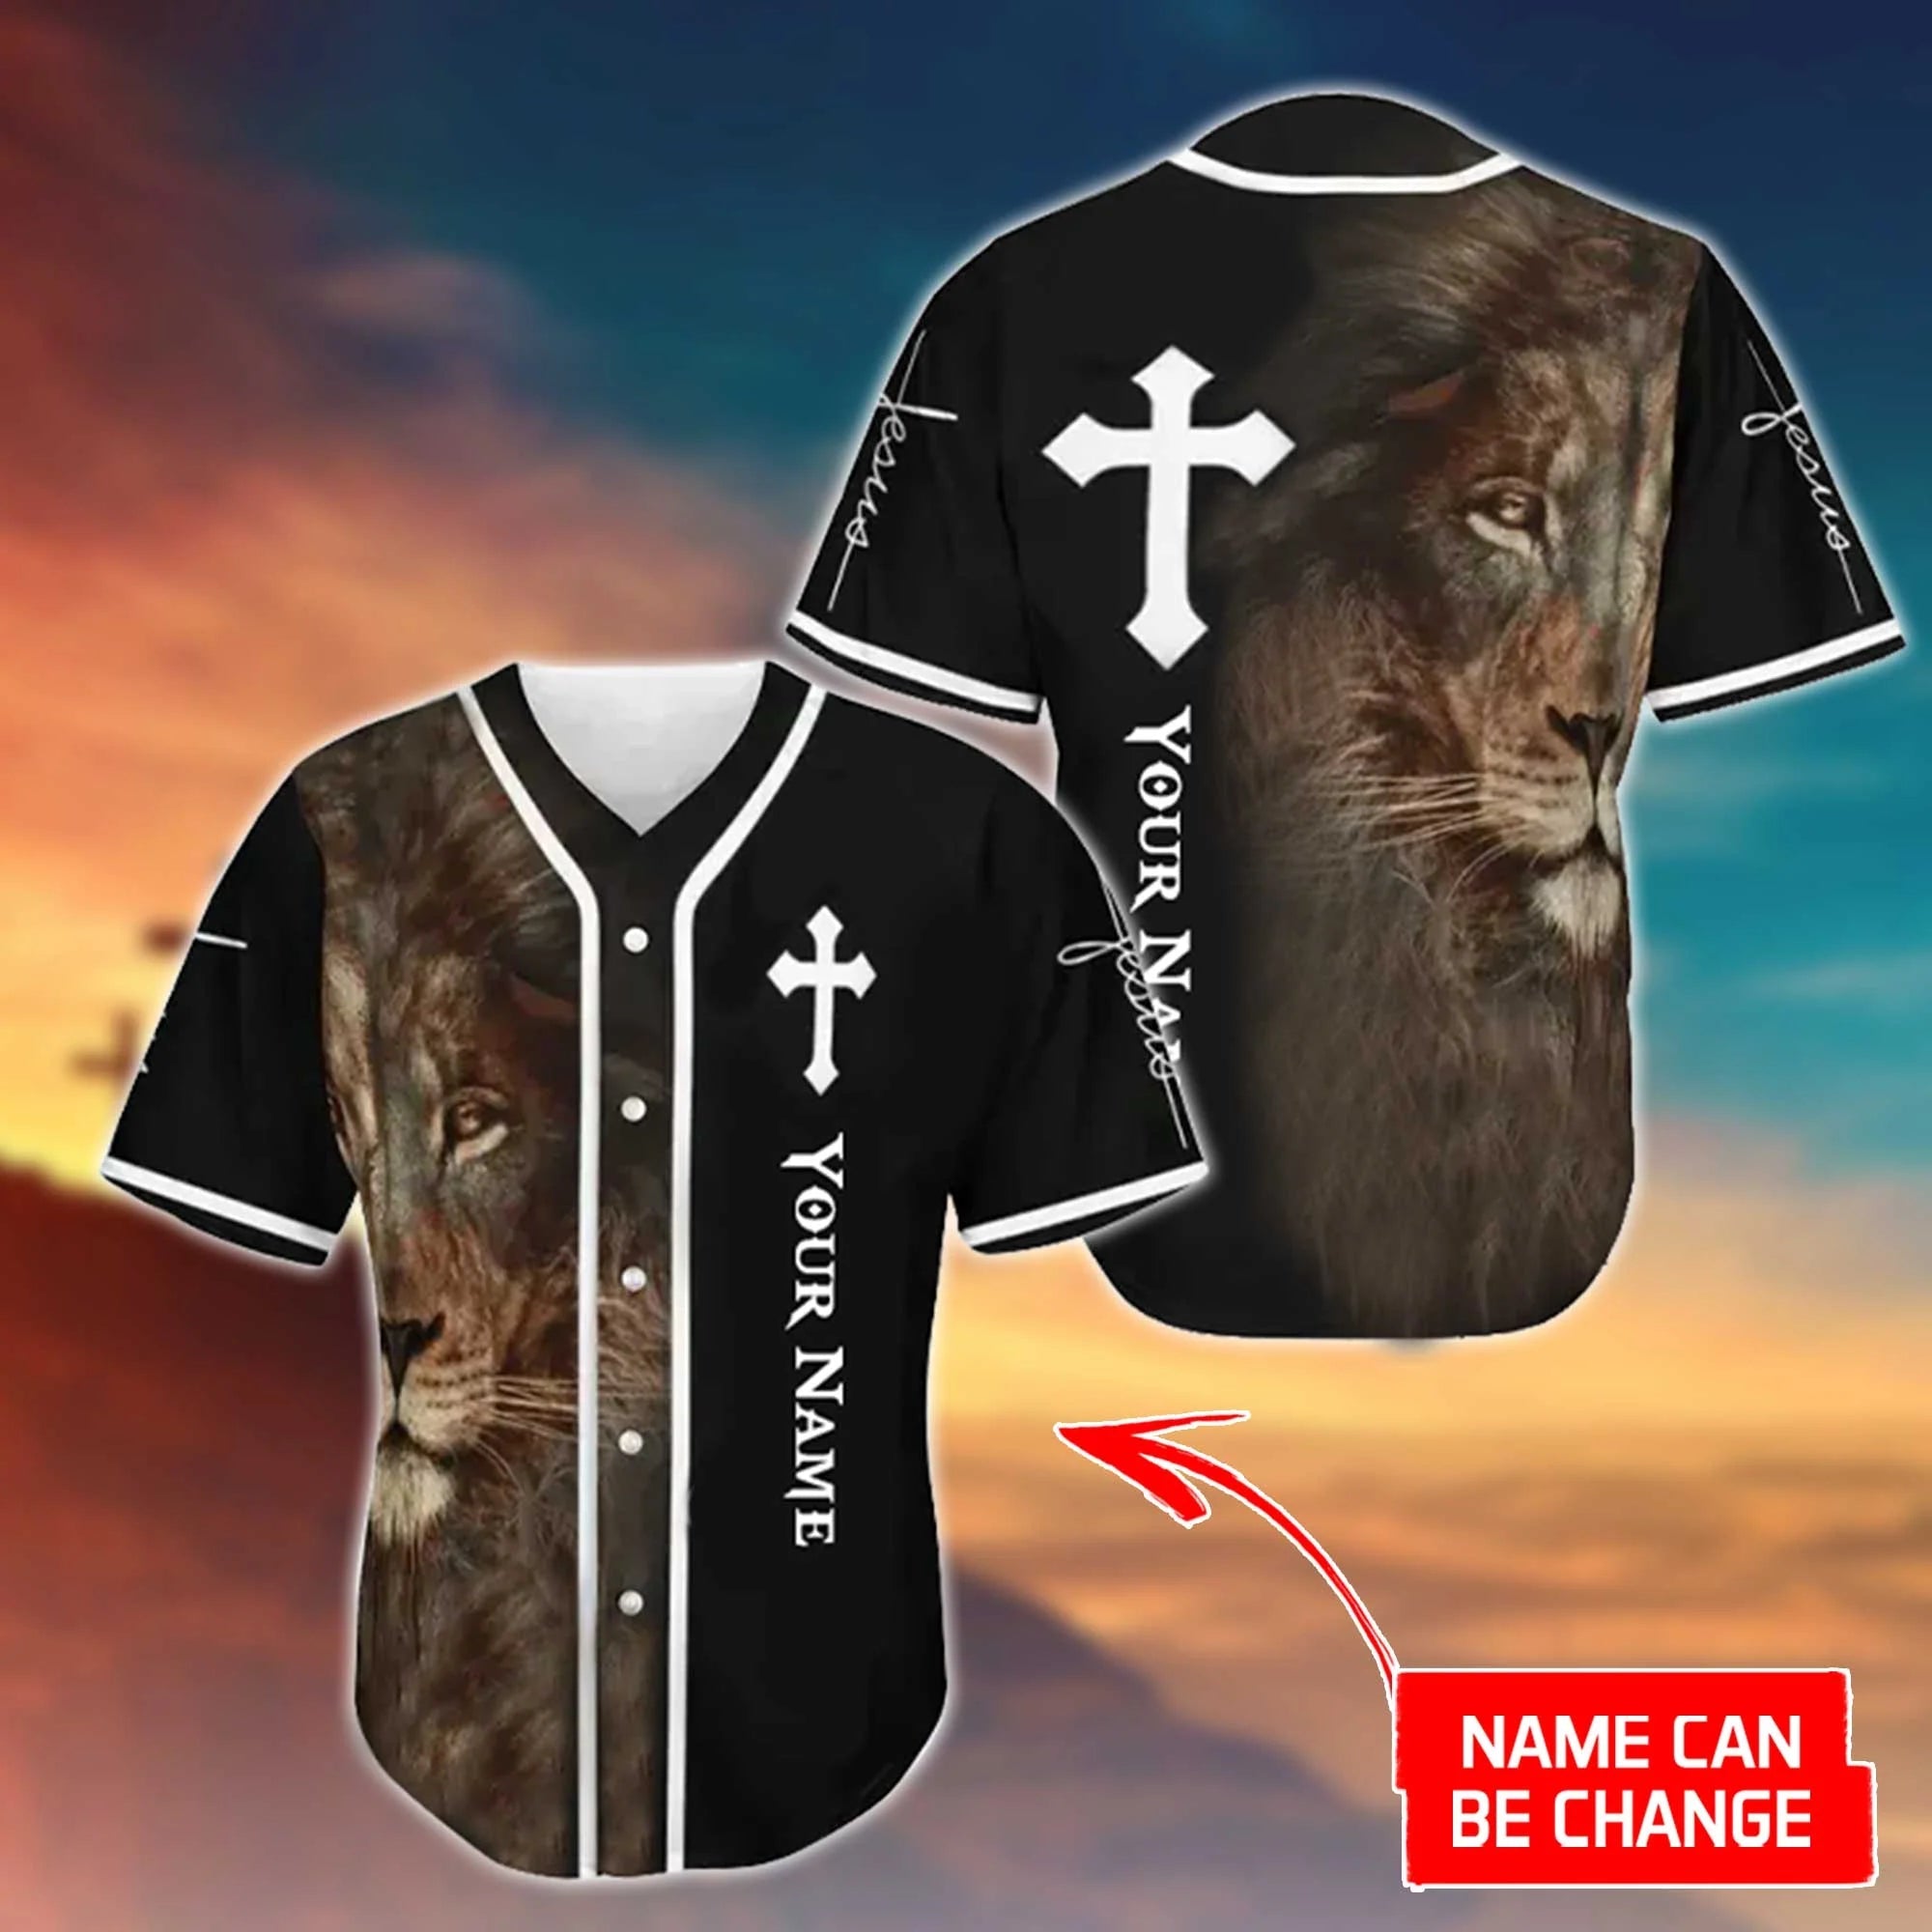 Cross, Lion Baseball Jersey - Jesus Custom Printed Baseball Jersey Shirt For Men and Women